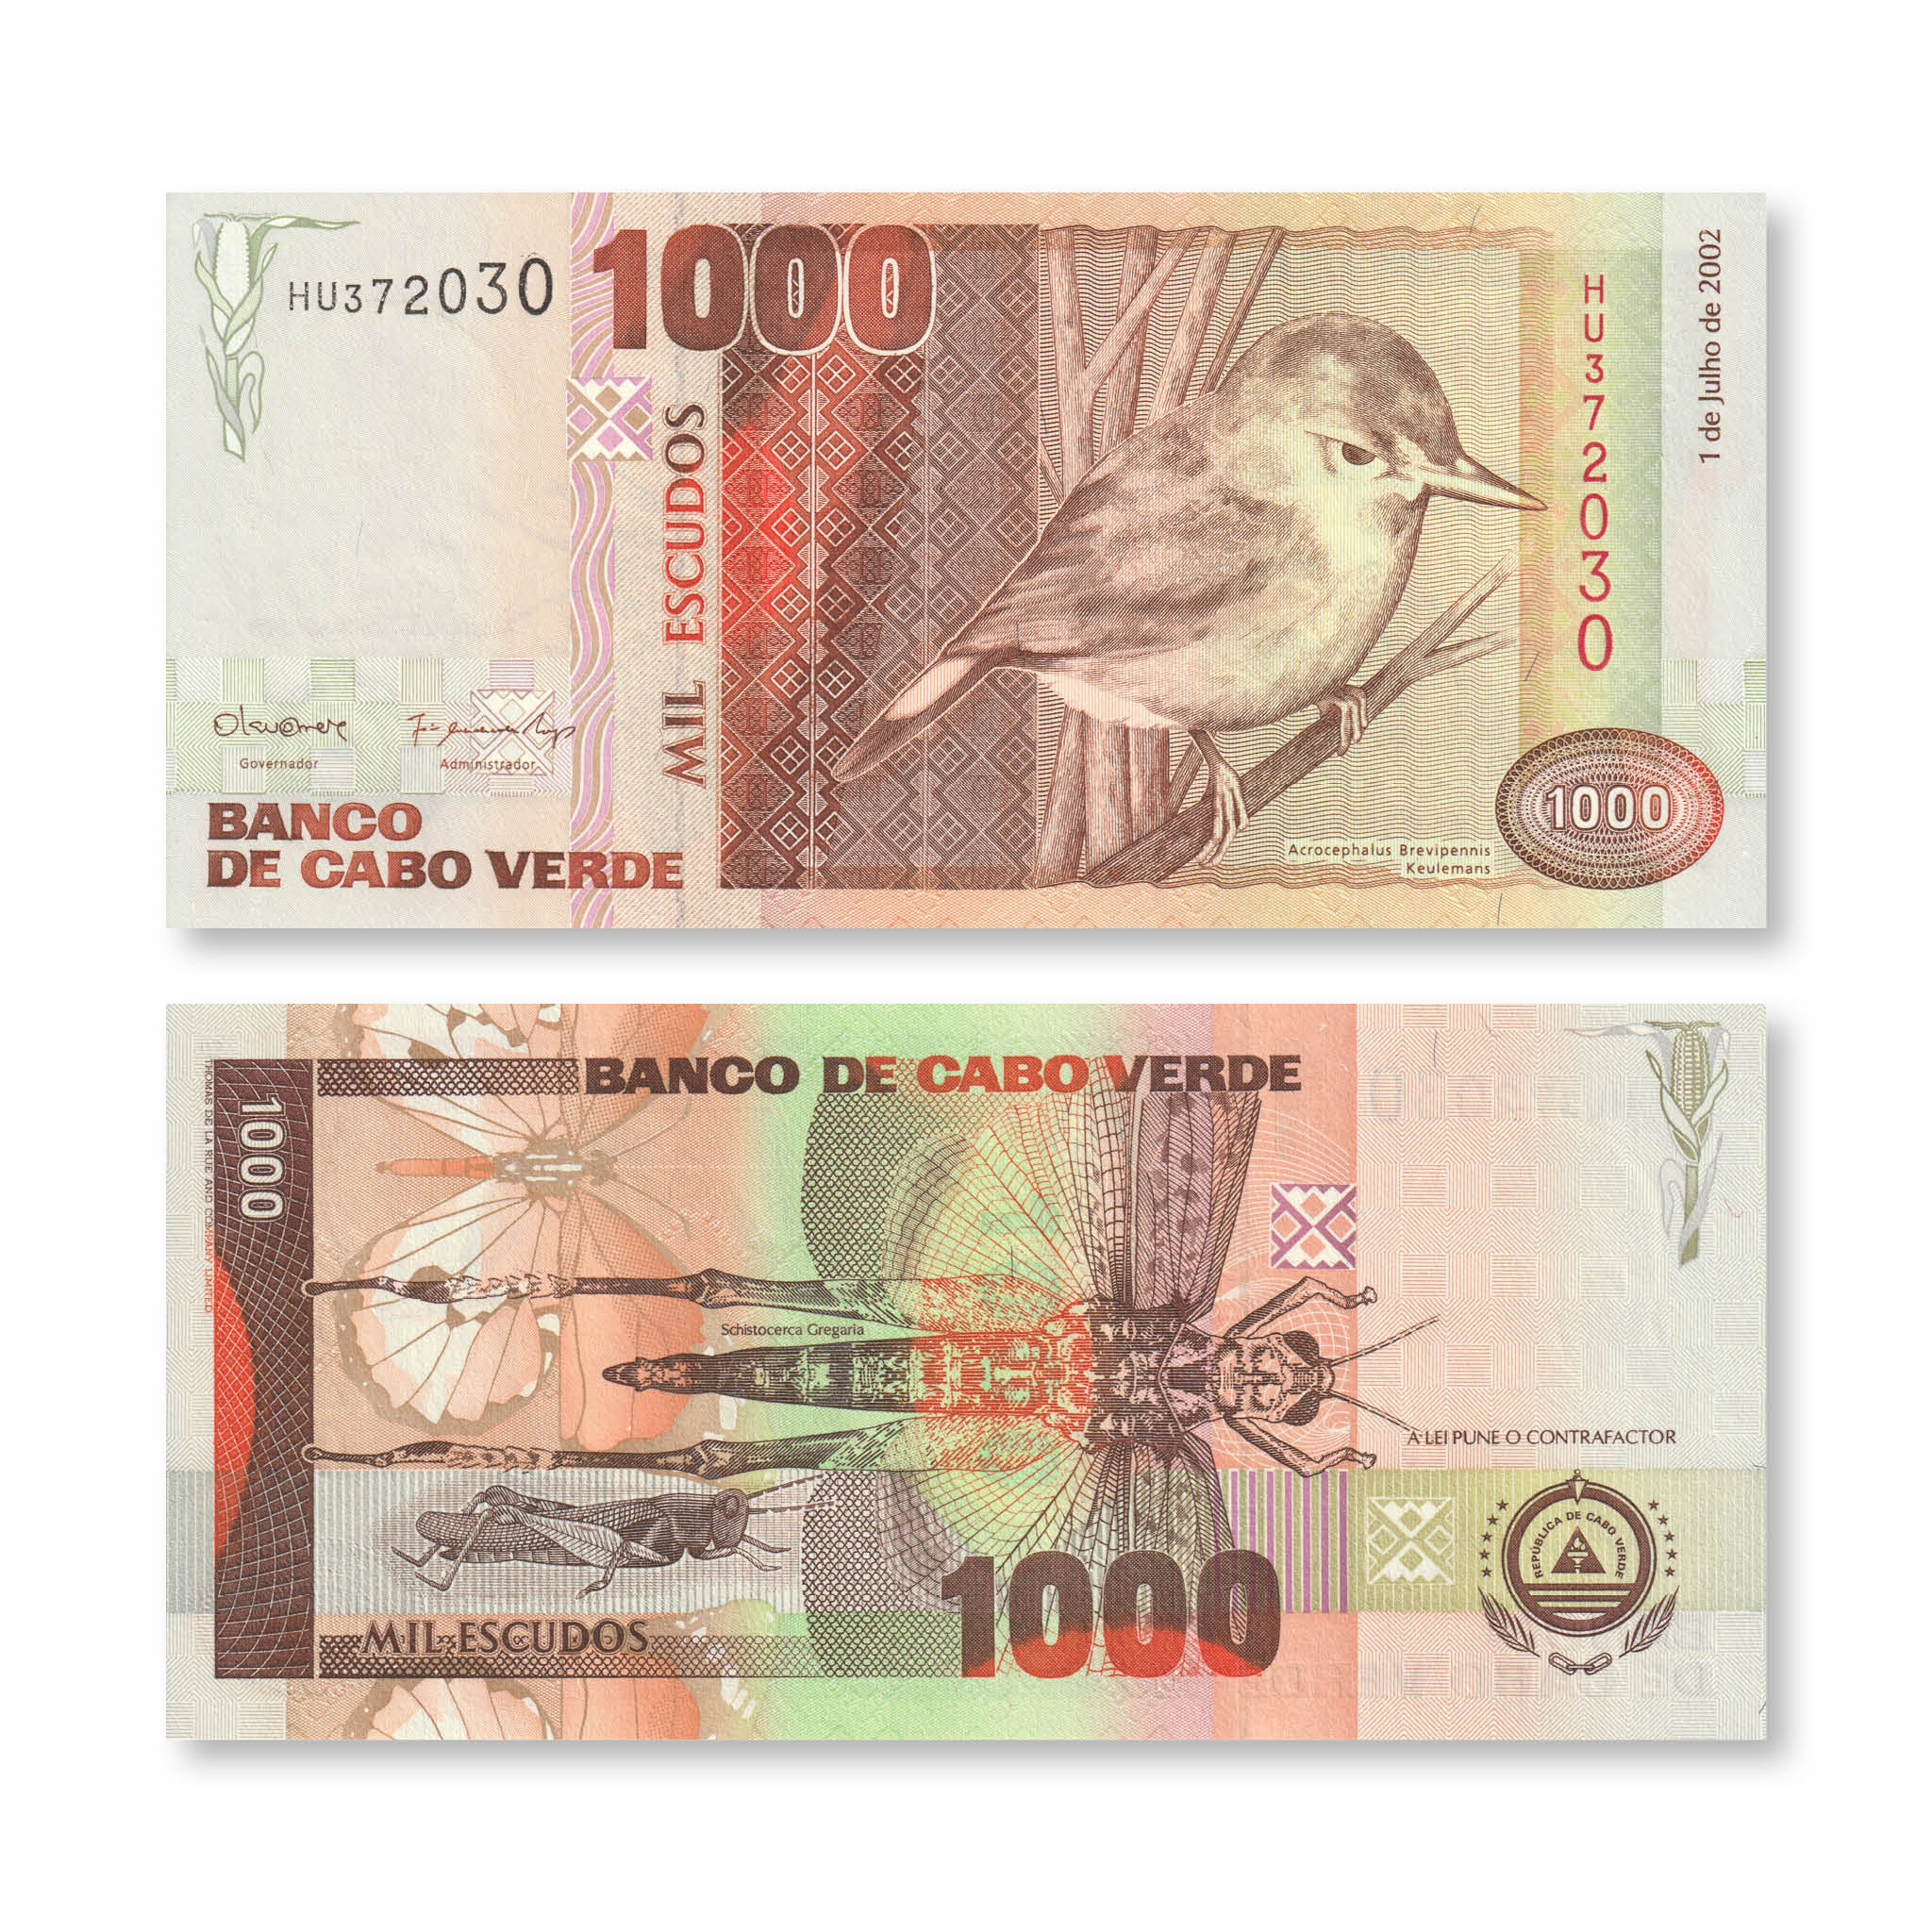 Cape Verde 1000 Escudos, 2002, B211b, P65b, UNC - Robert's World Money - World Banknotes